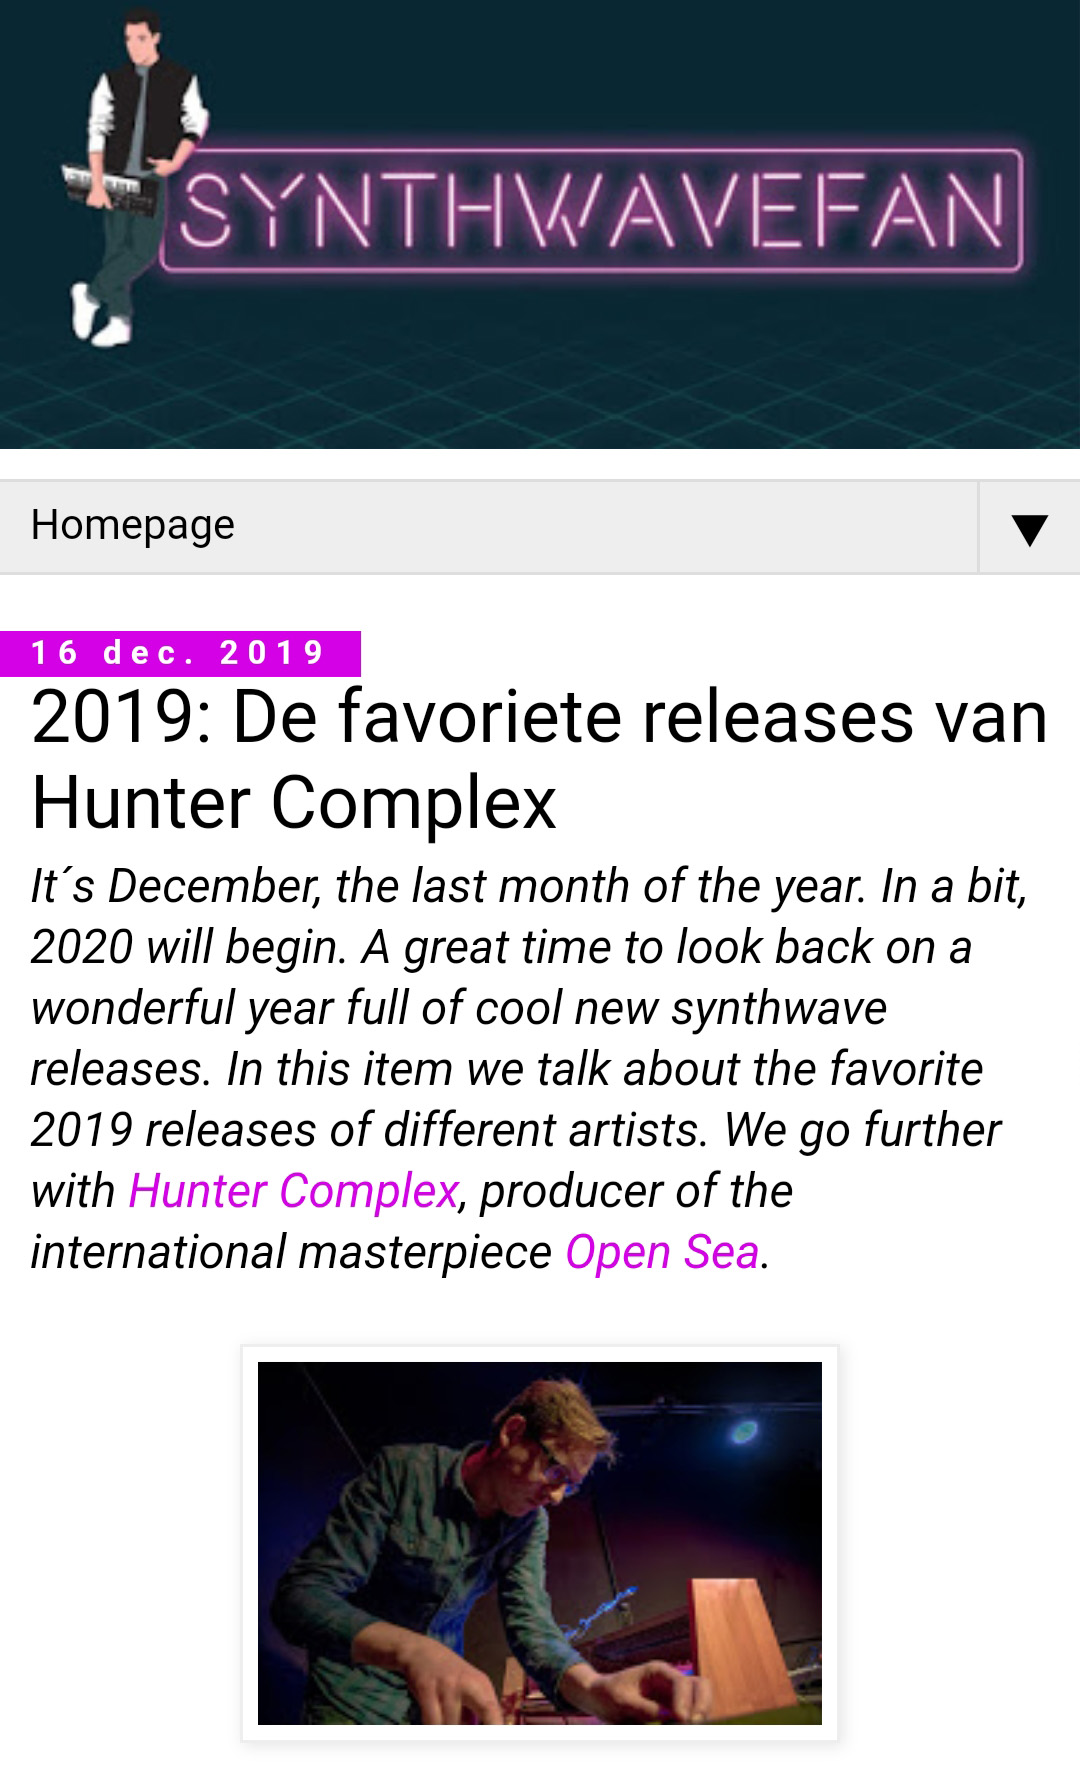 hunter-complex-synthwavefan-december-16-2019